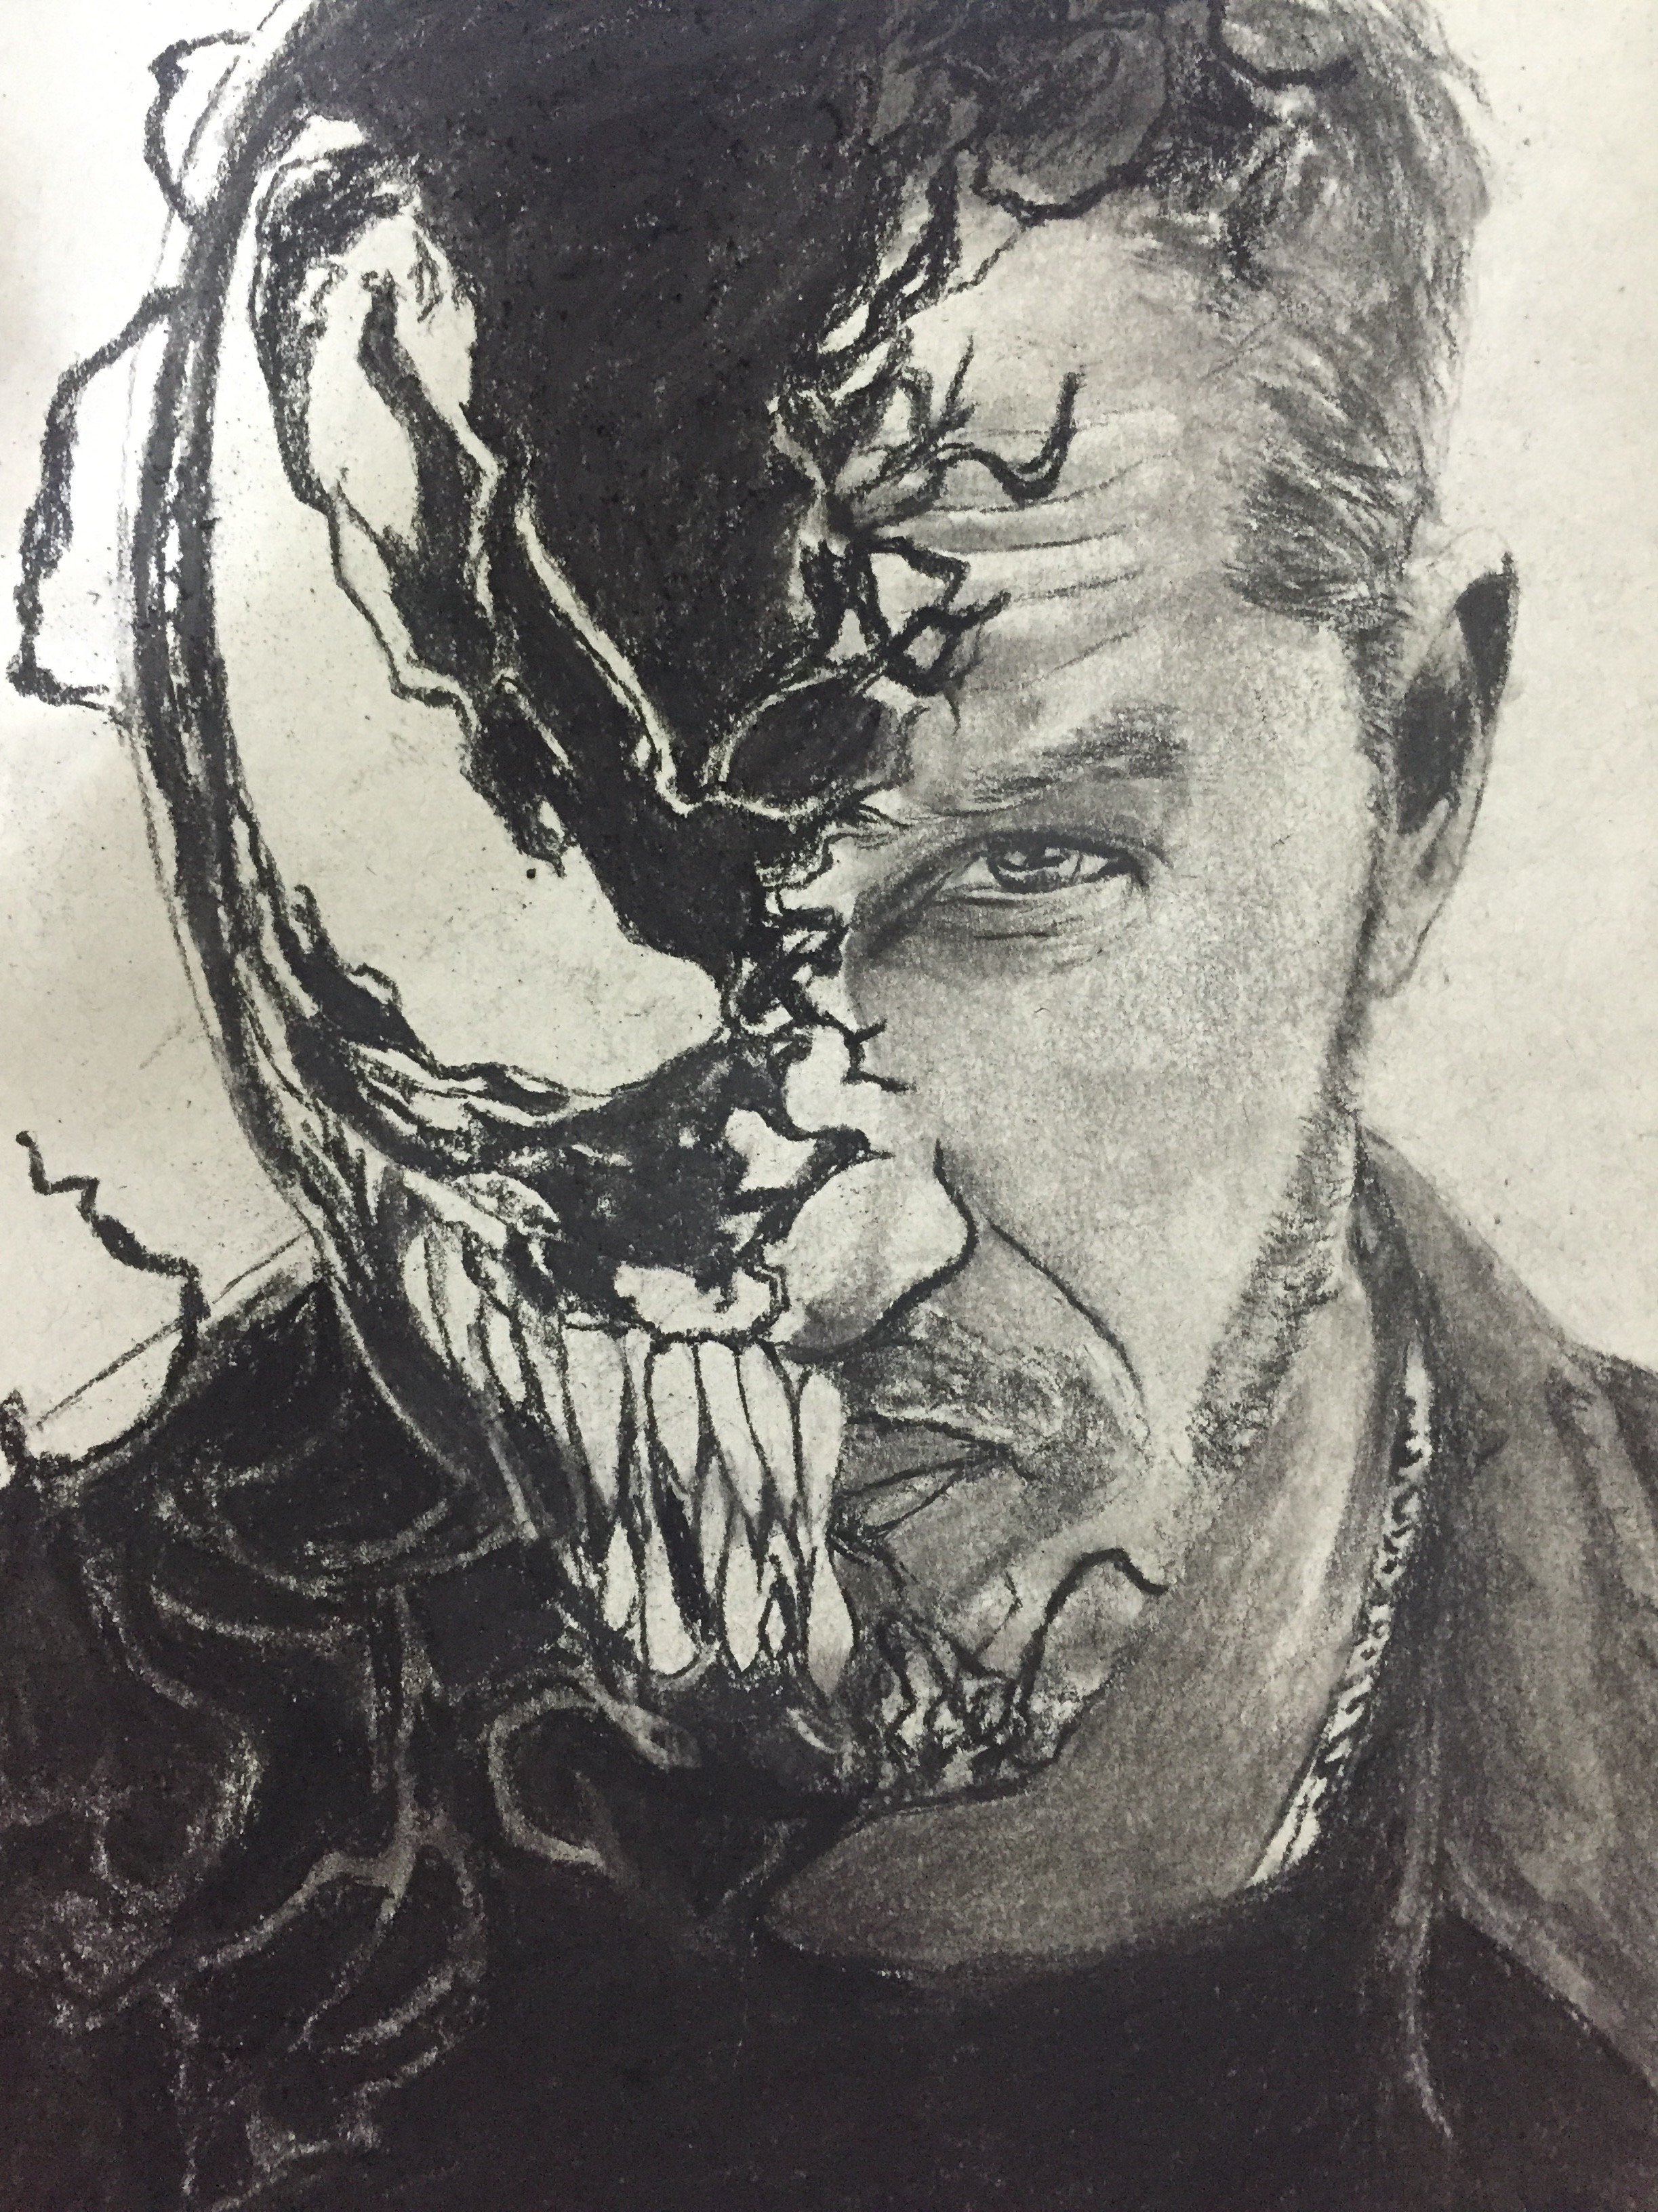 My Drawing Of Venom by Chrisarus12 on DeviantArt